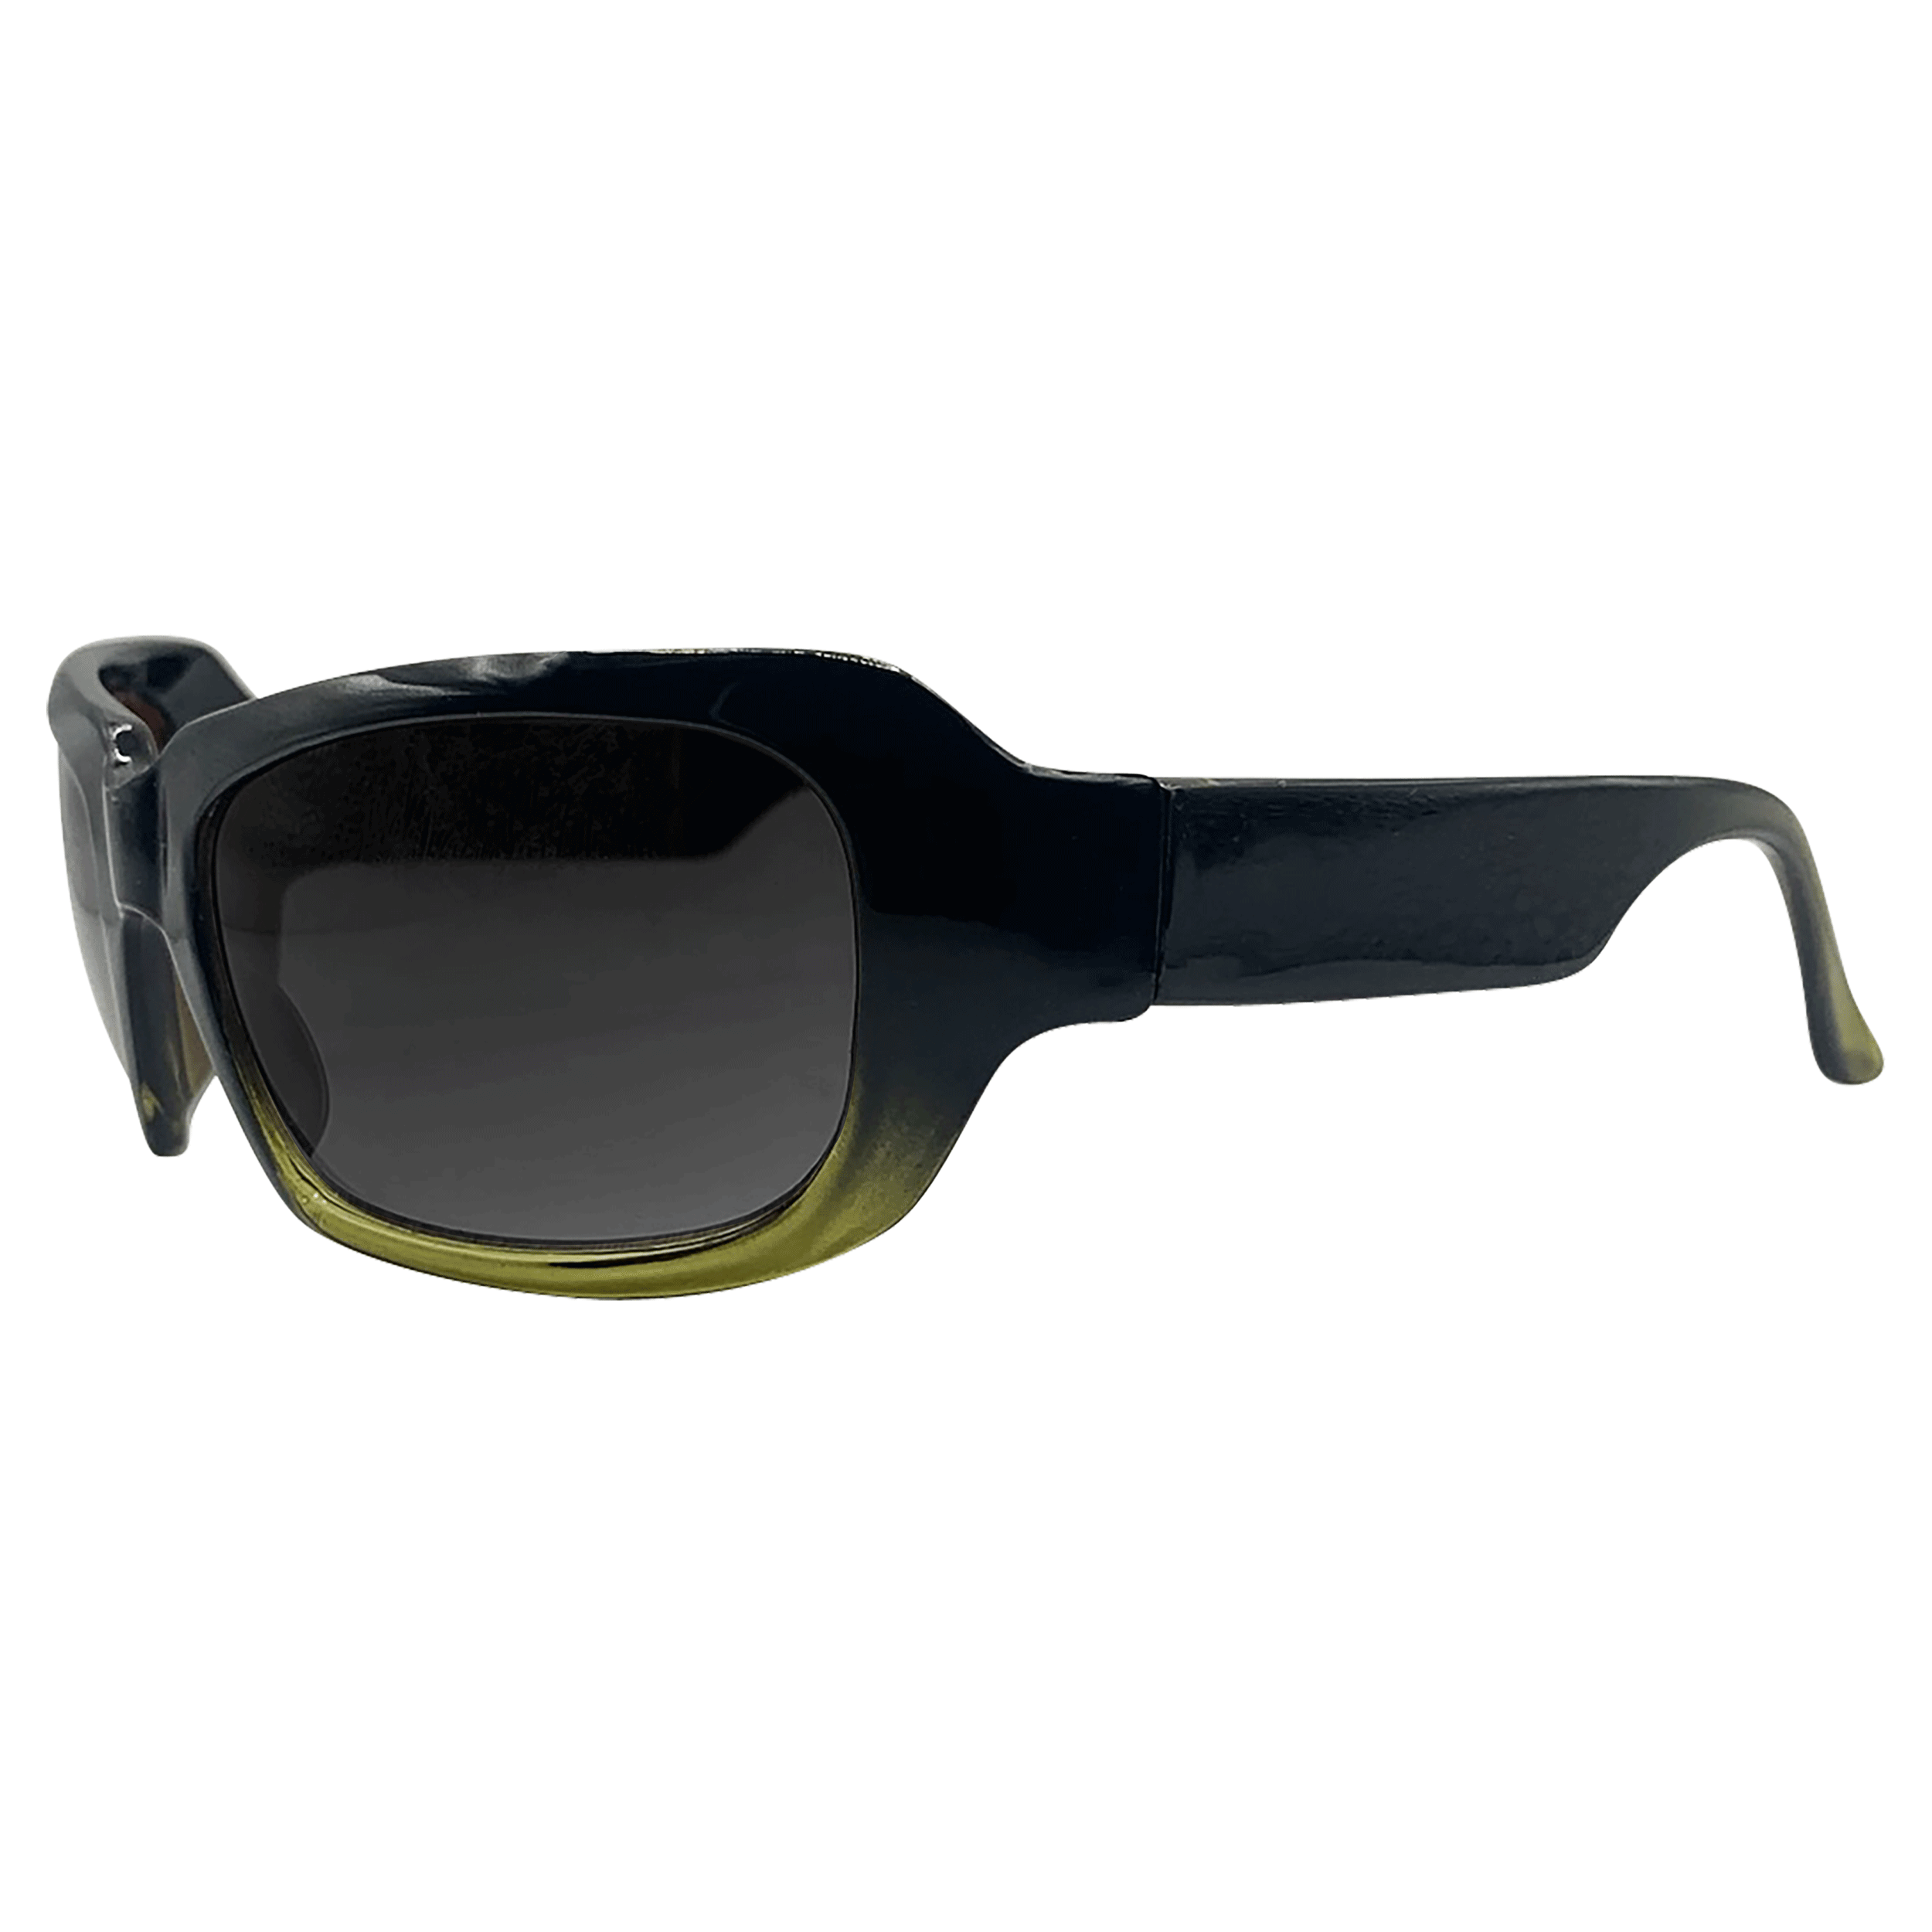 POSTINO Square Sports Sunglasses